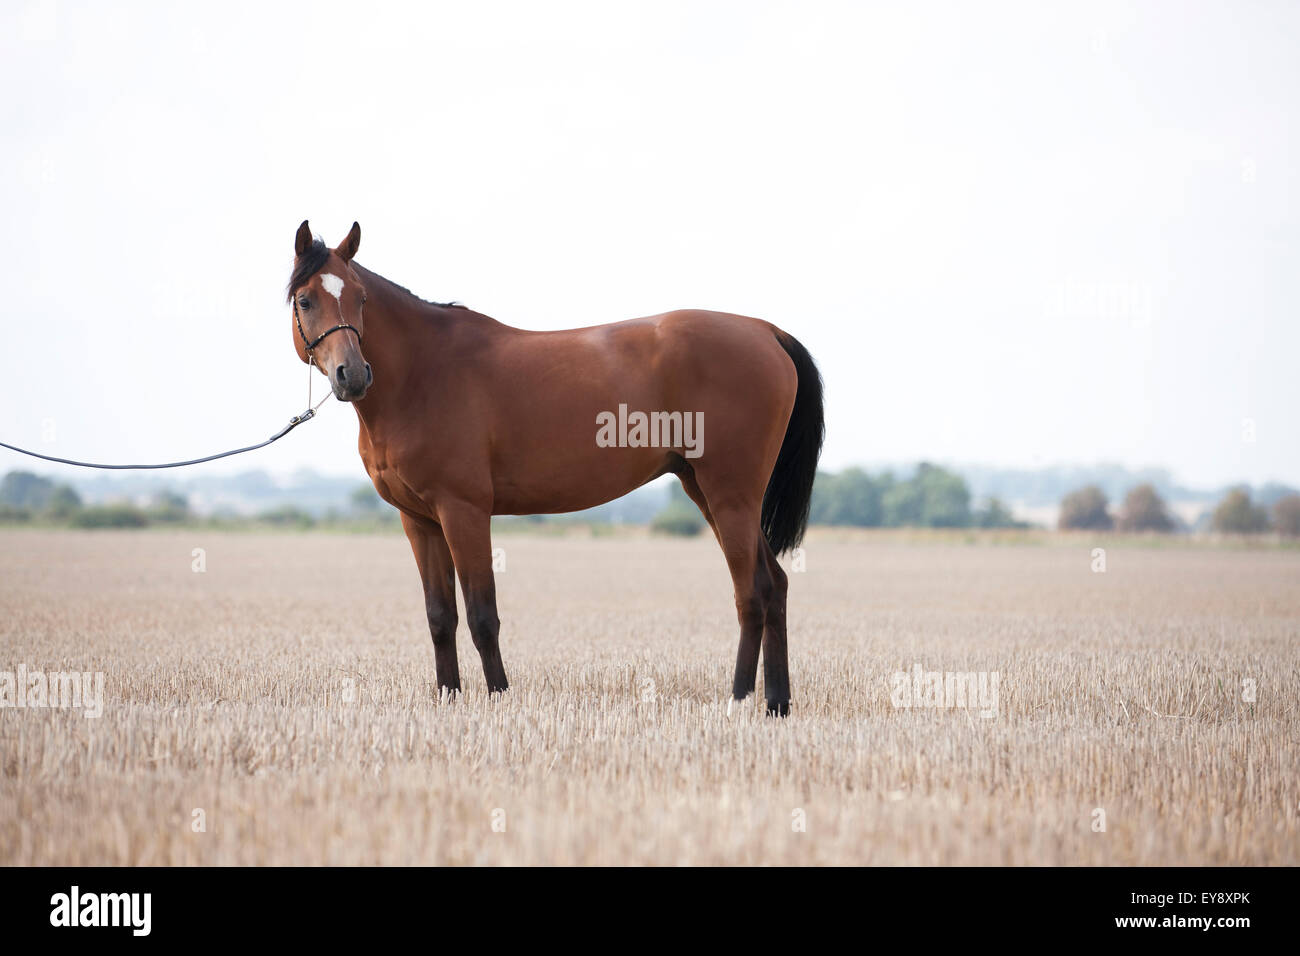 An Arabian horse standing in a stubble field, looking away Stock Photo